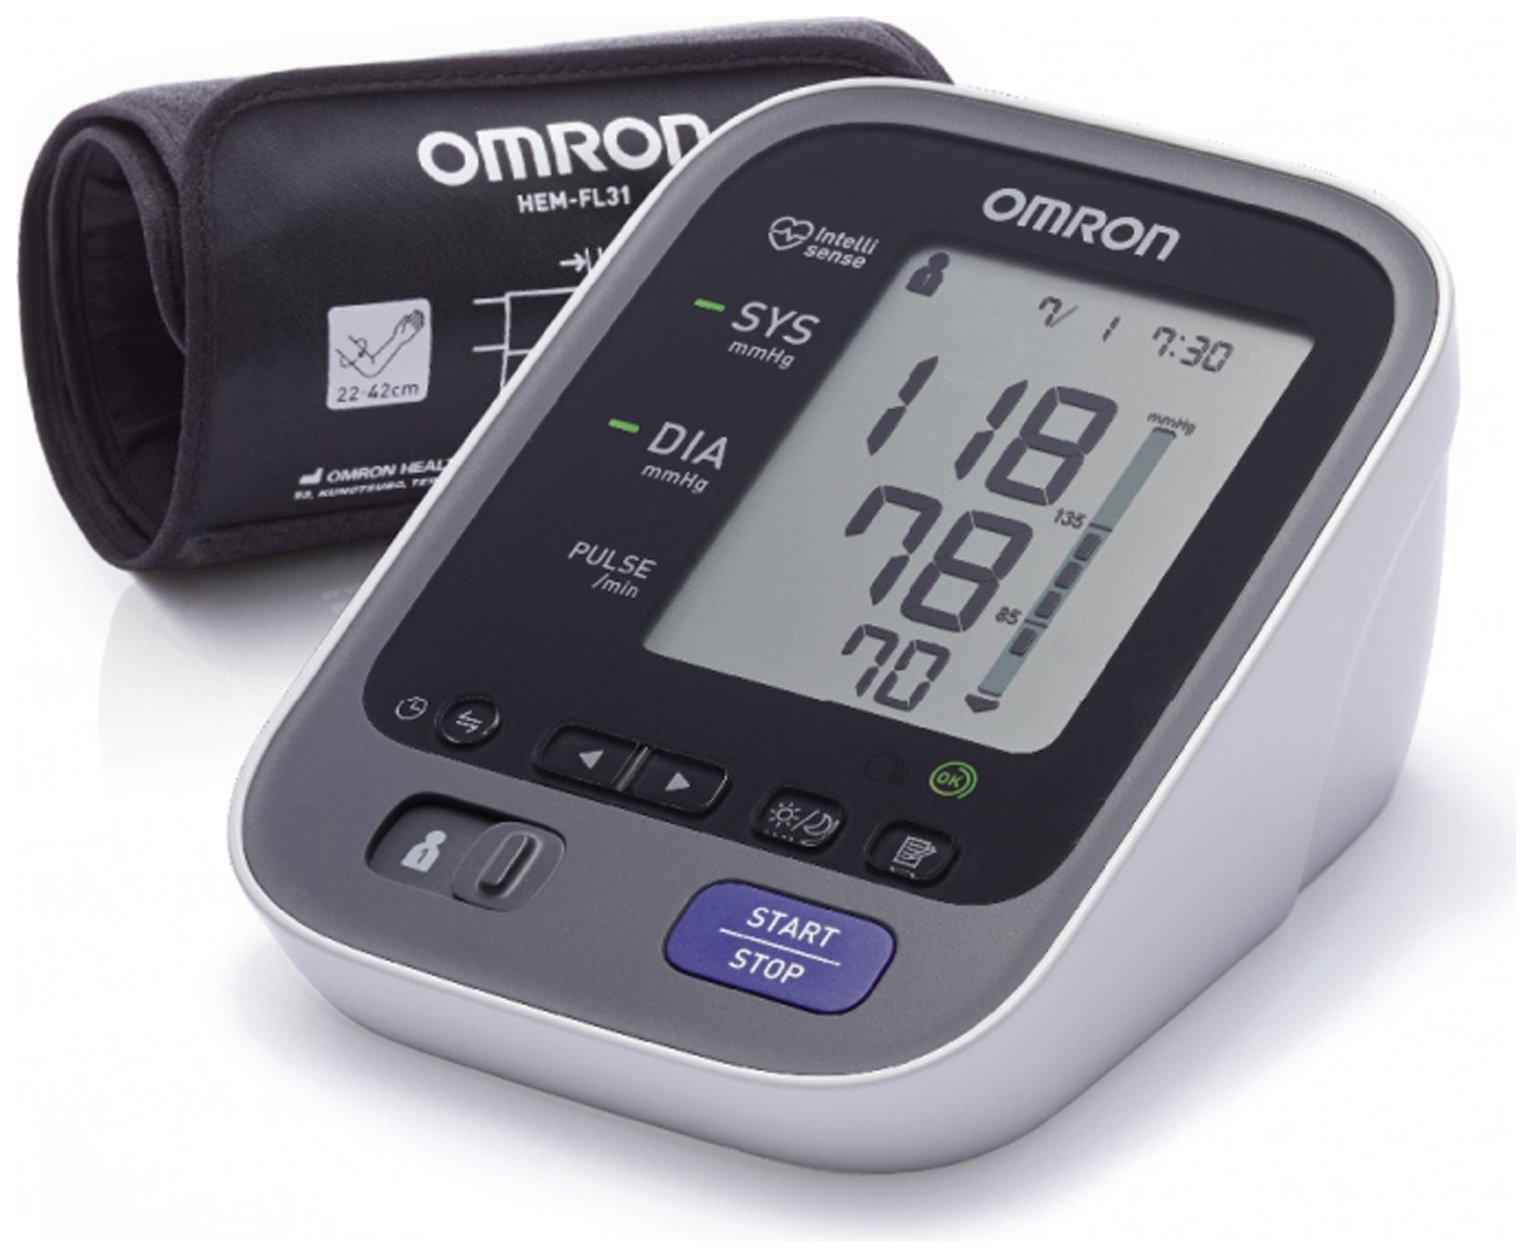 Omron M7 Intelii IT Upper Arm Blood Pressure Monitor